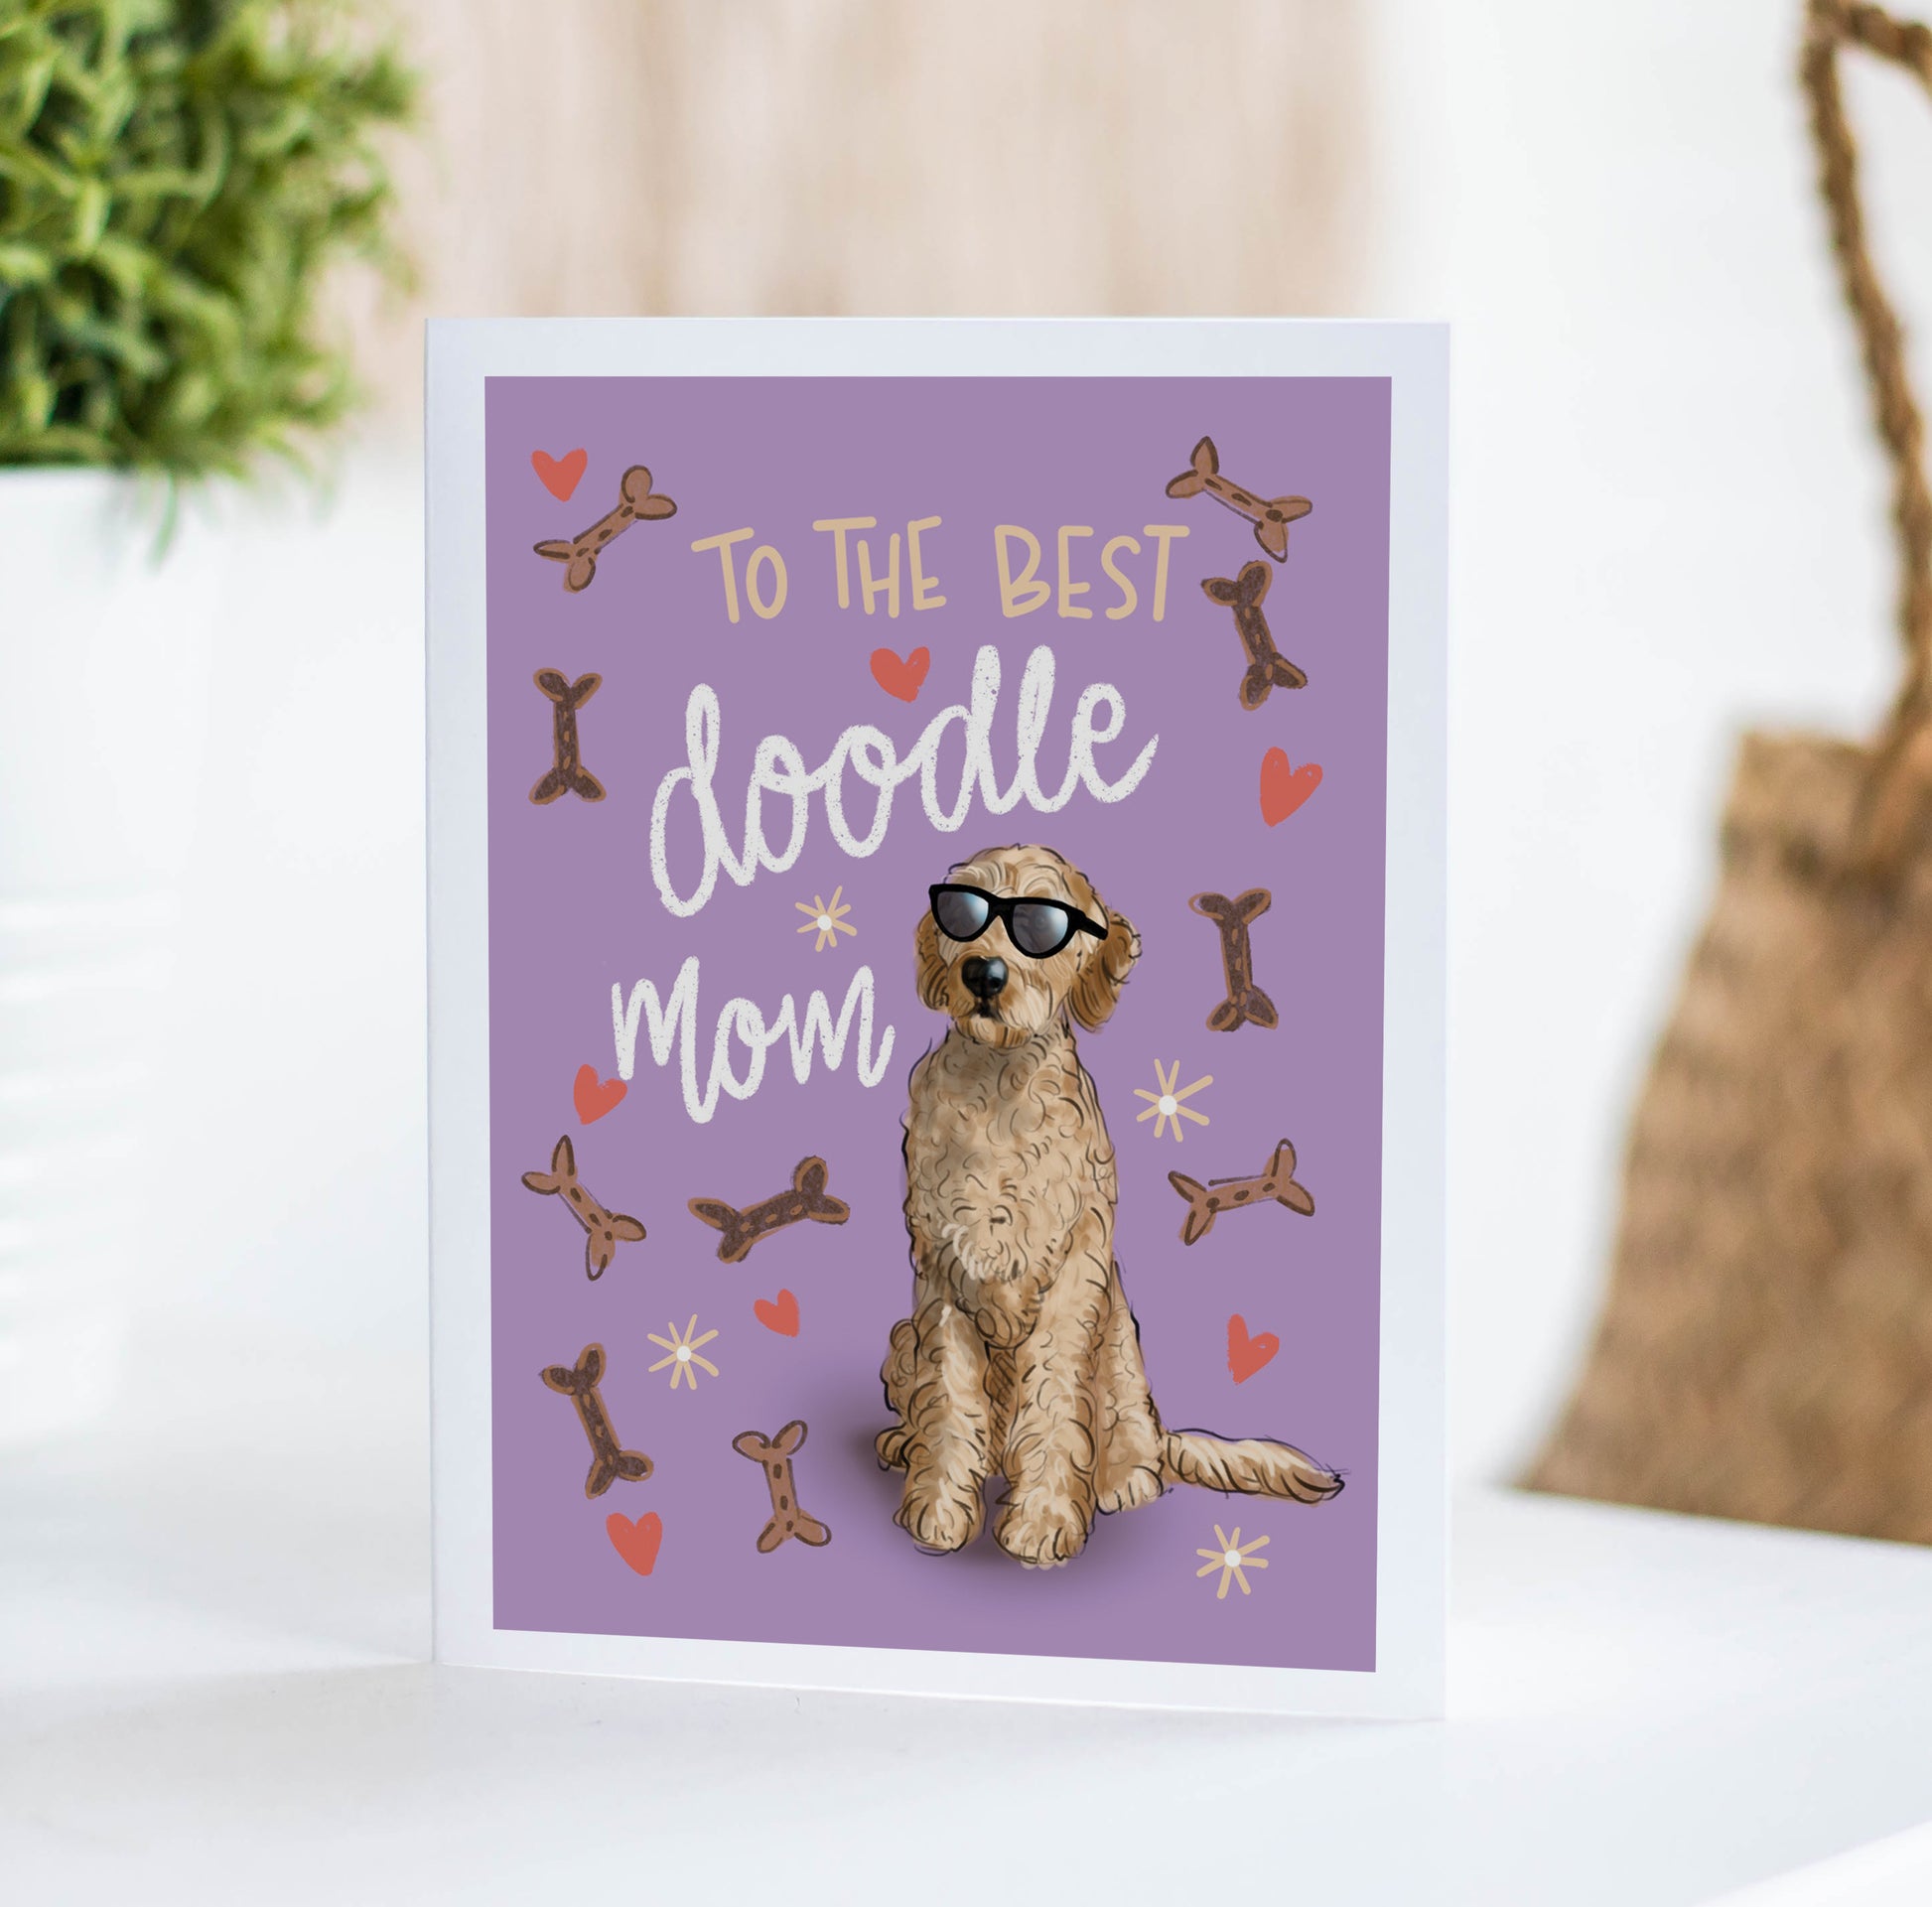 Doodle Dog Mother's Day card for Doodle moms